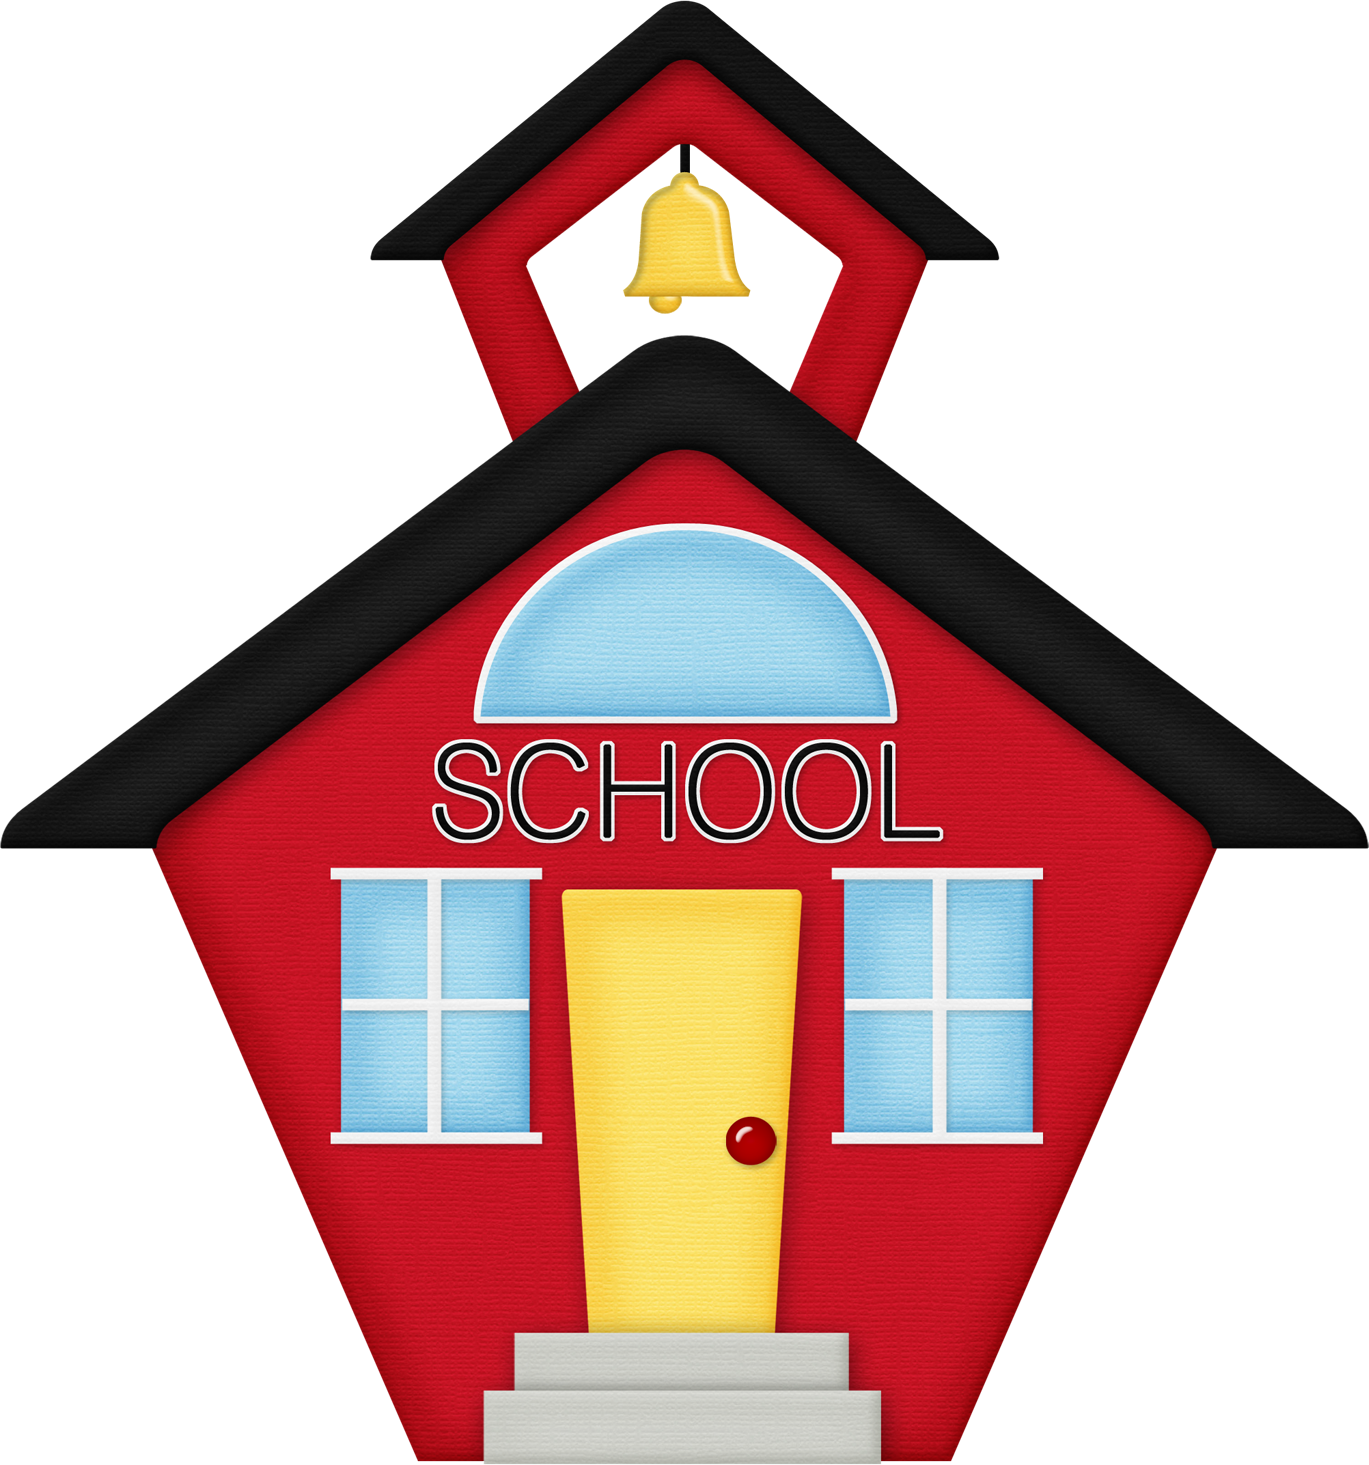 Schoolhouse silhouette clipart